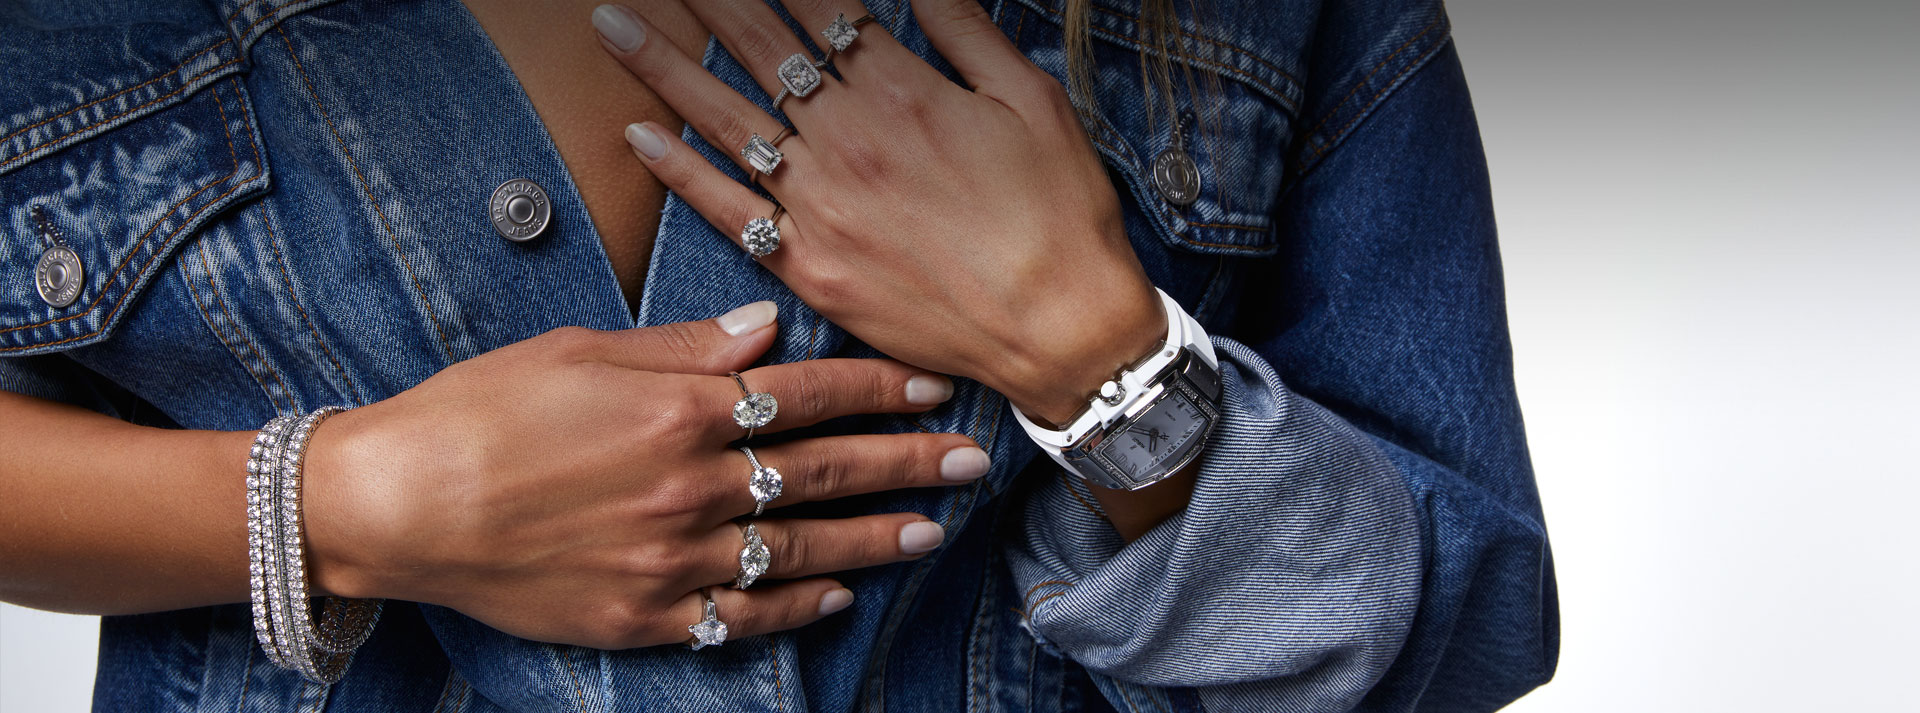 woman wearing multiple diamond rings